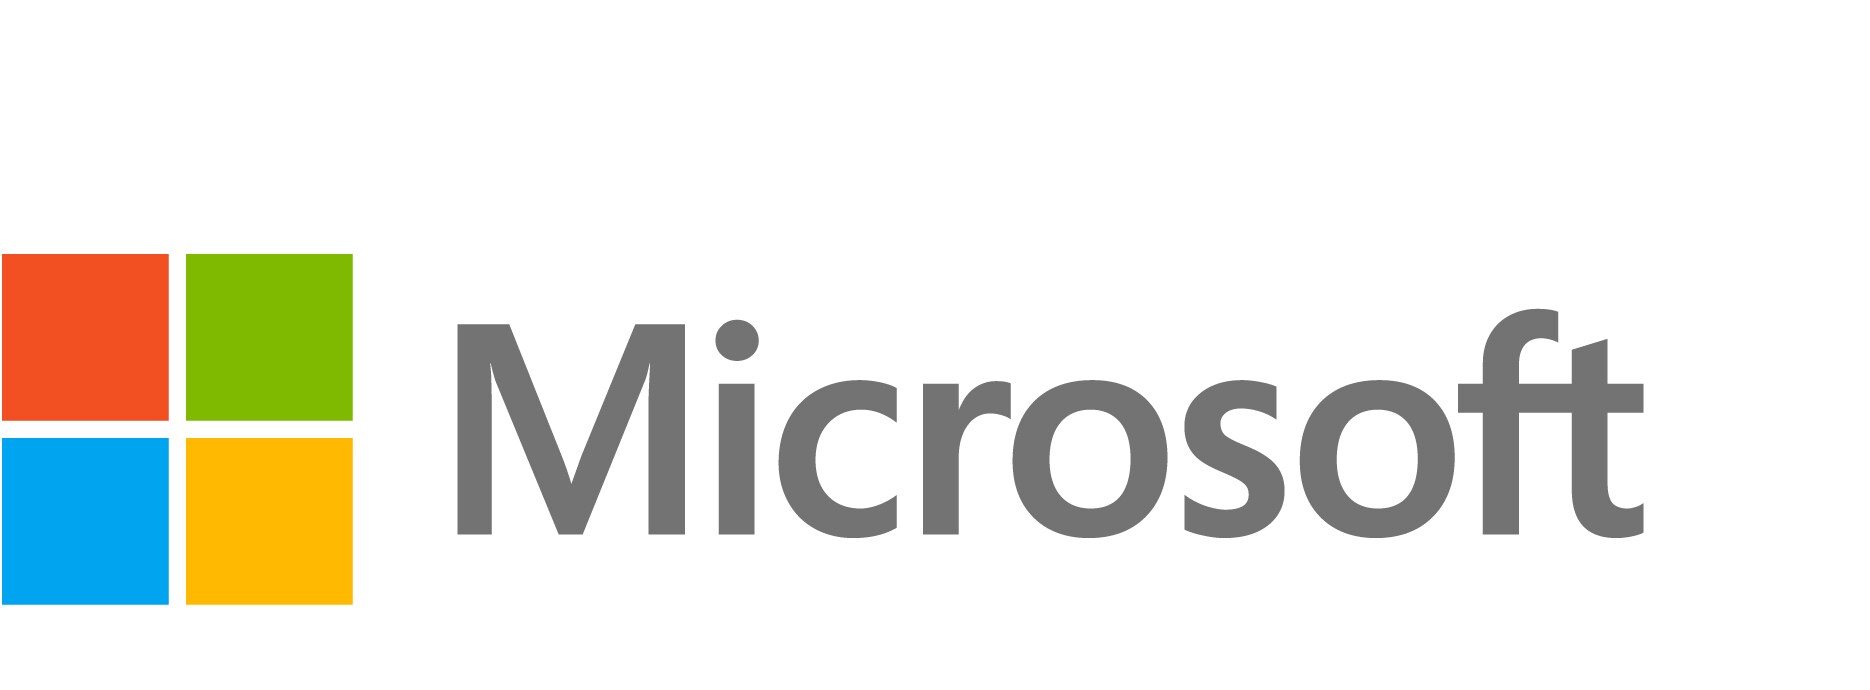 Microsoft Teams Enterprise - subscription license (1 year) - 1 license